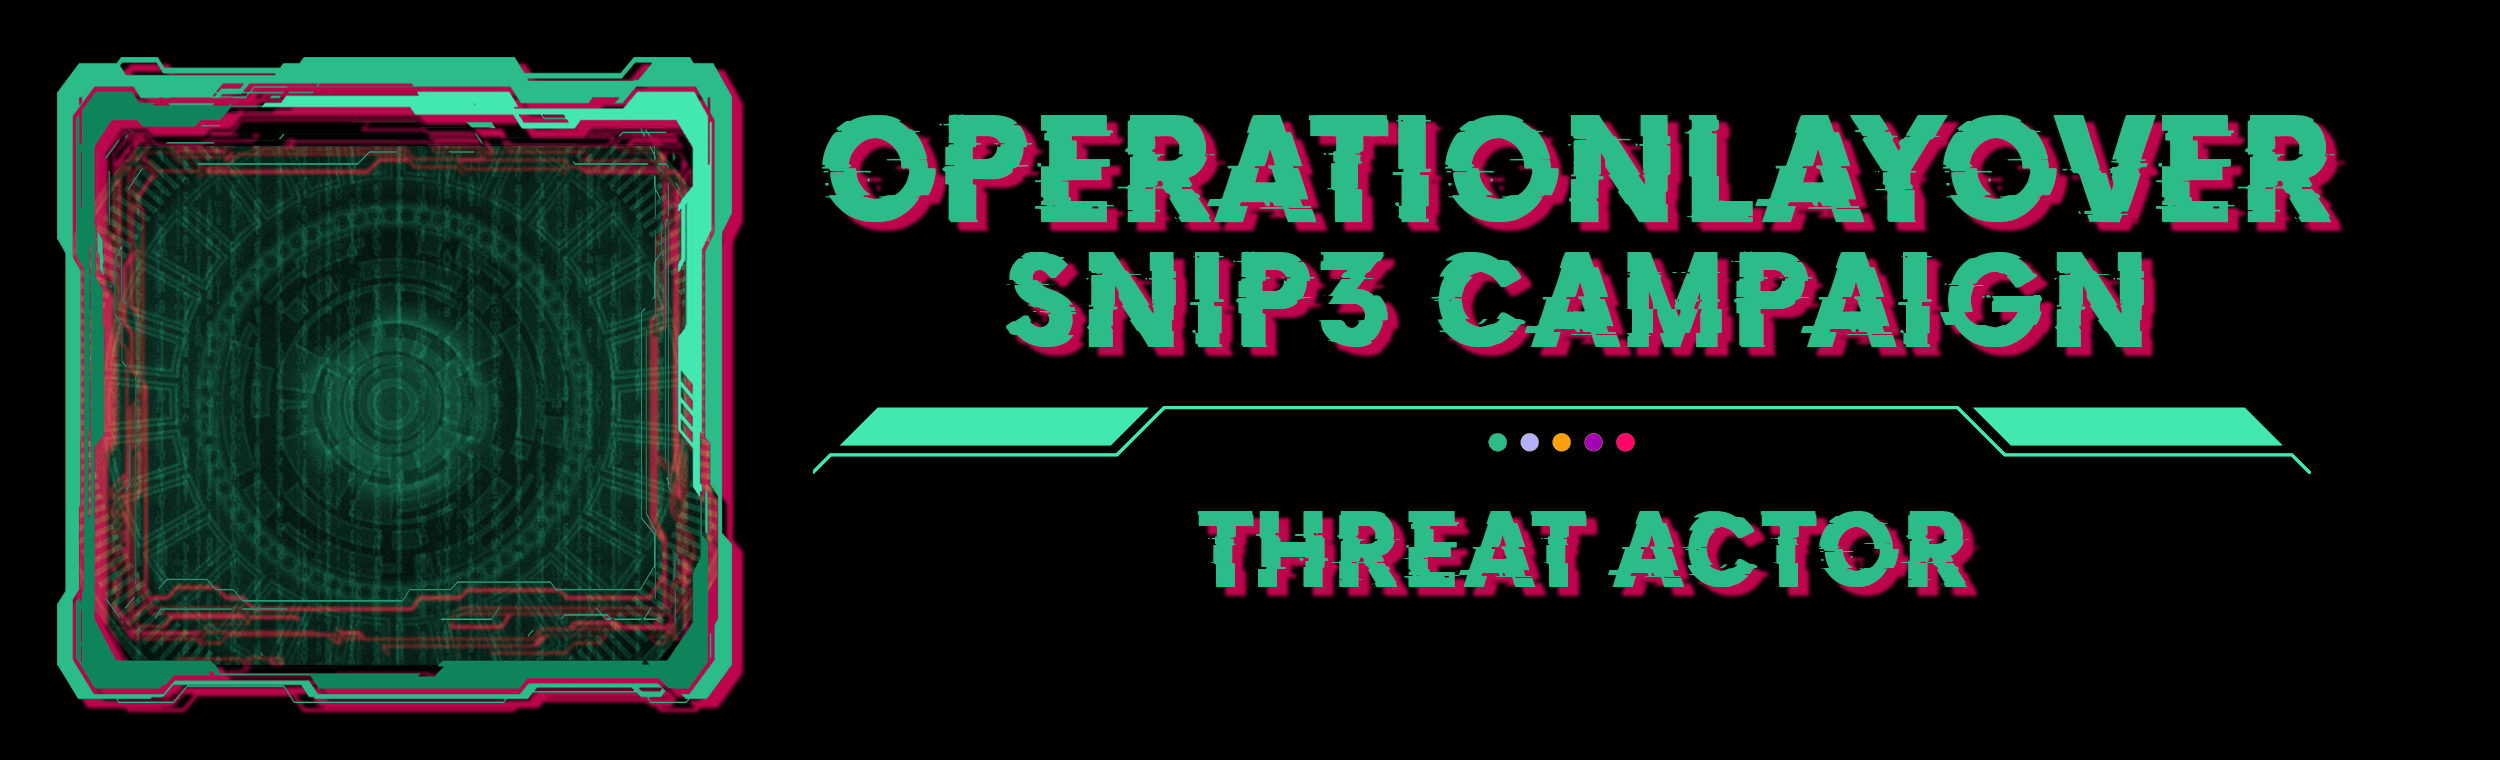 OperationLayover | TA2541 in SNIP3 campaign